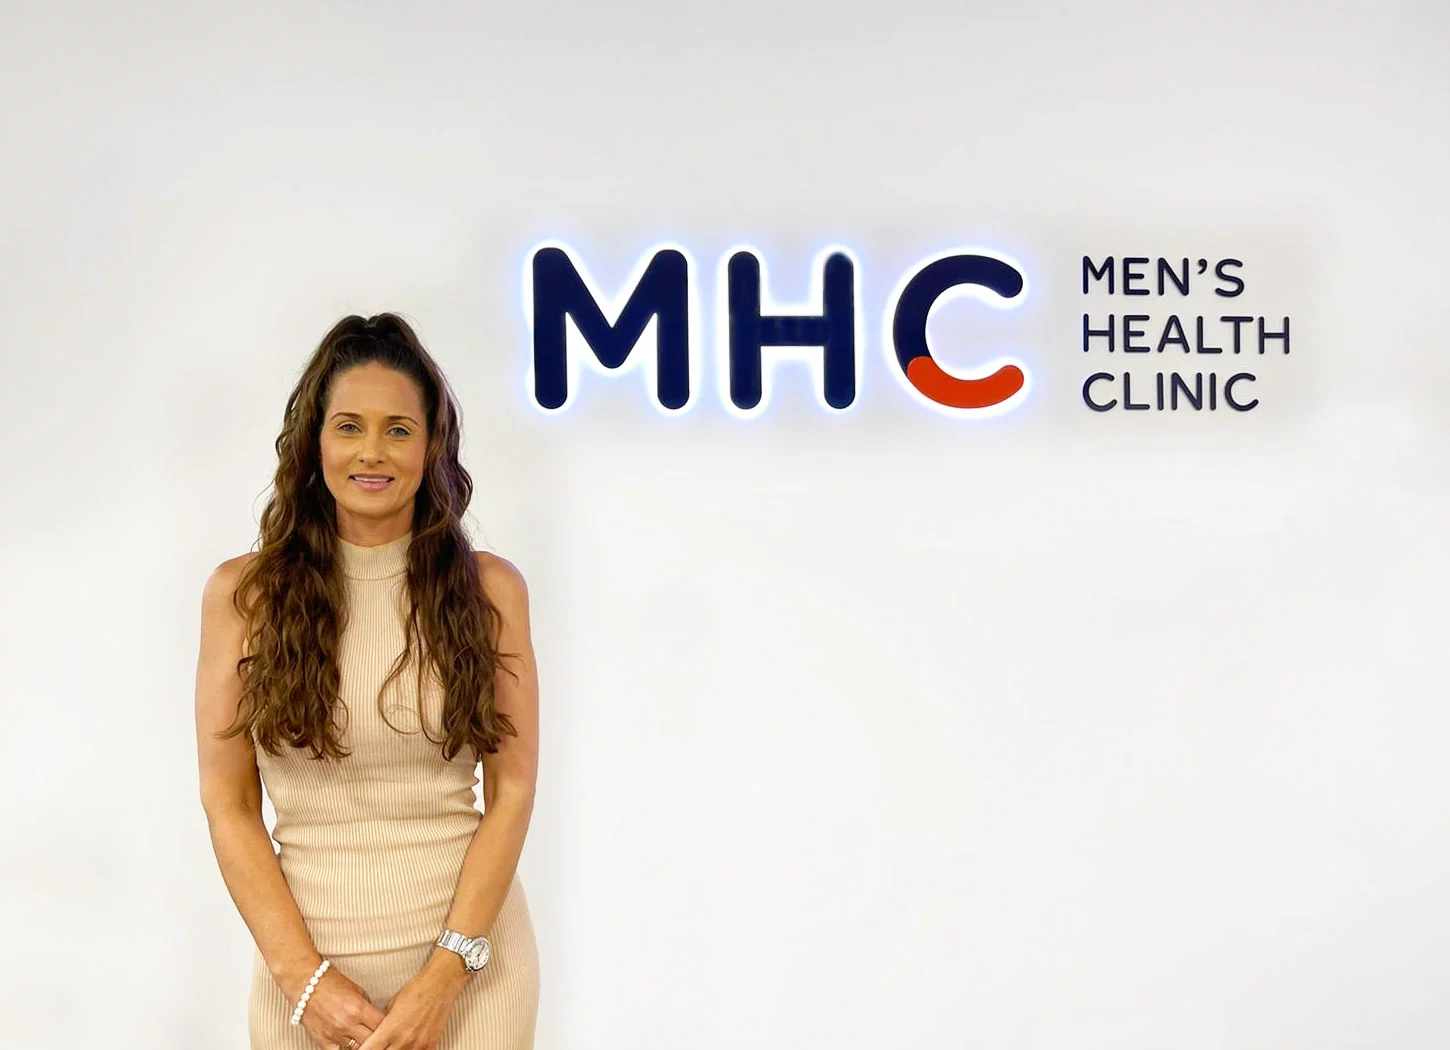 Men's Health Clinic Australia